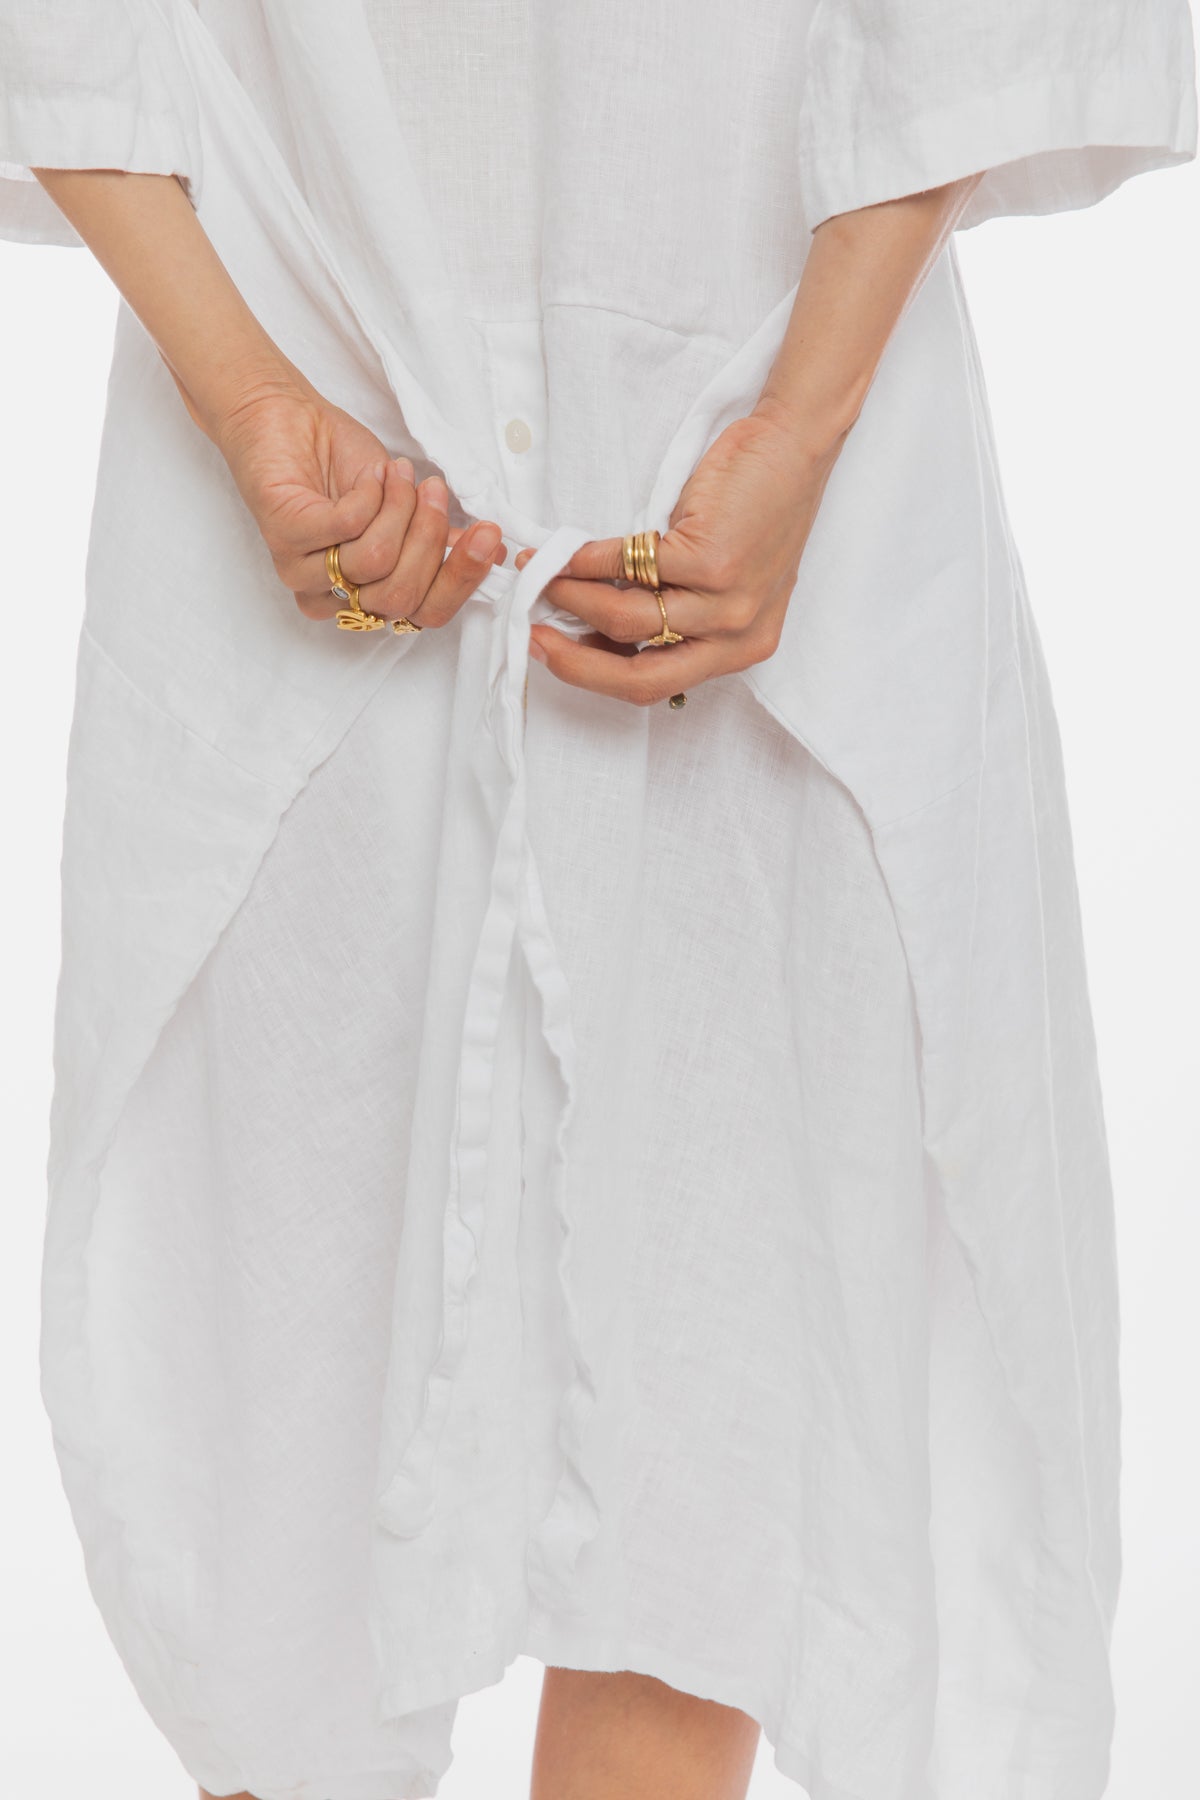 Enchantress Gown (100% Linen, Black & Off White)